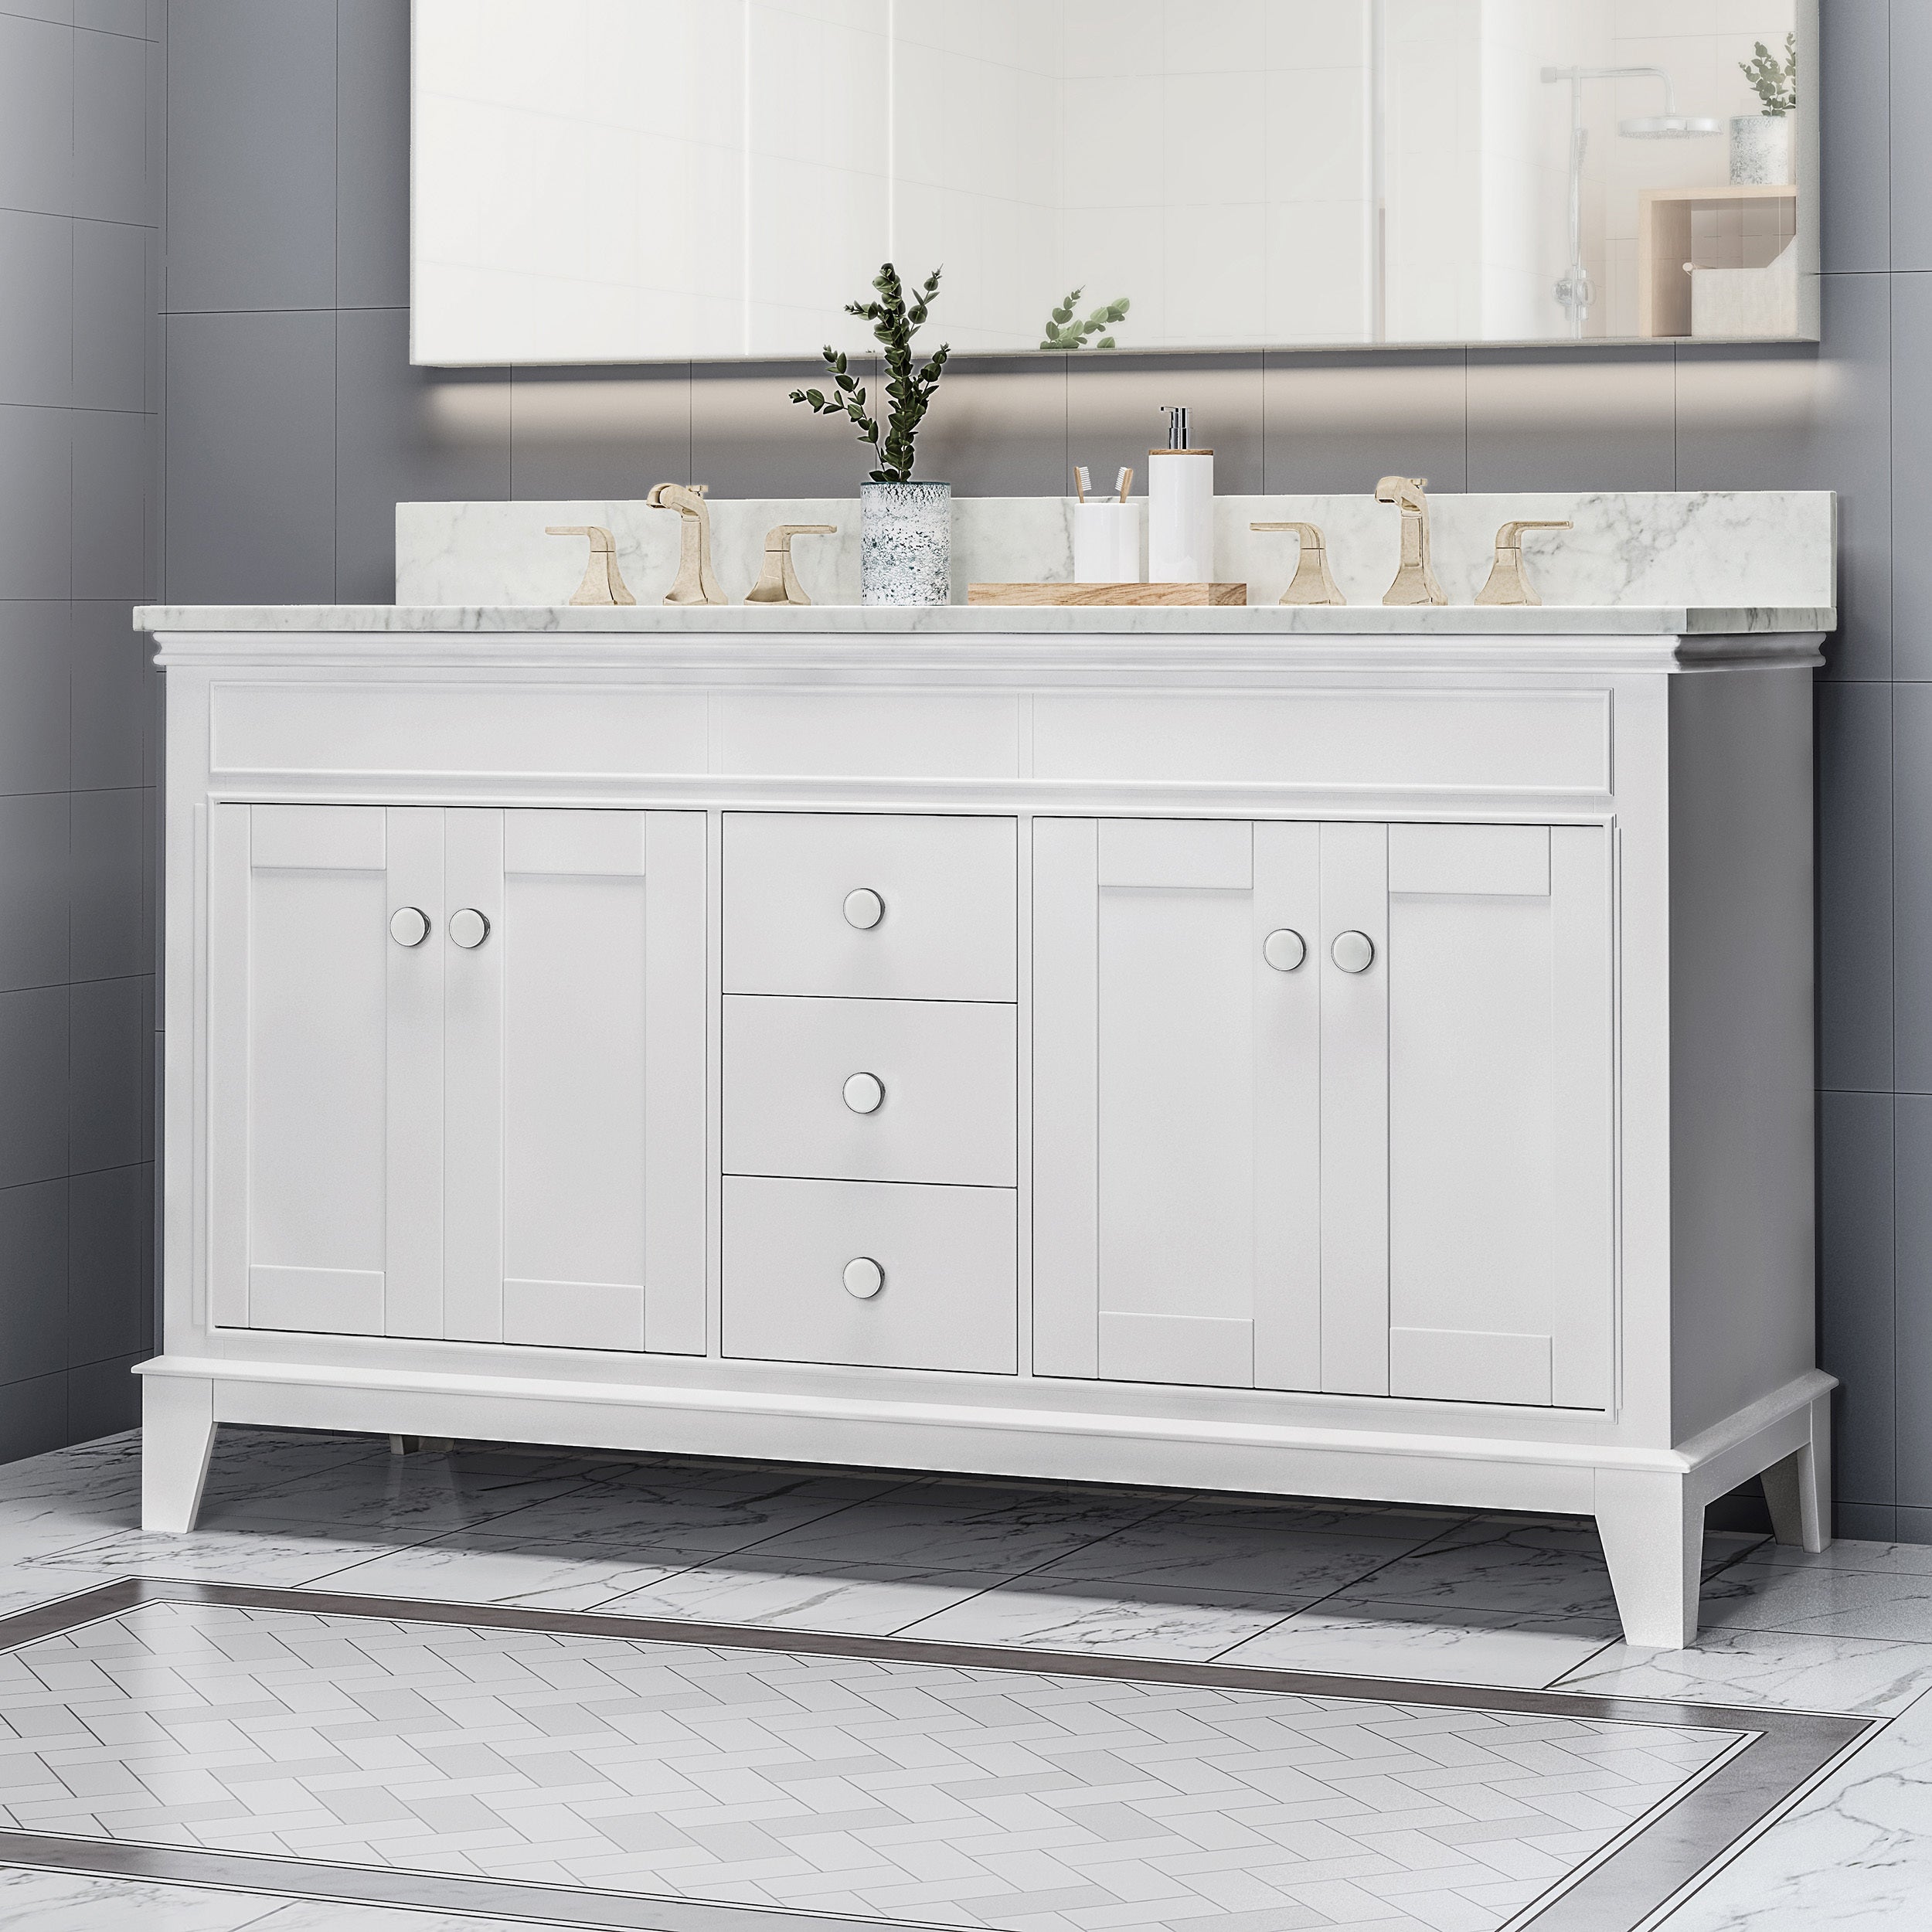 Tm-Home-60''-Double-Vanity-Cabinet-Bathroom